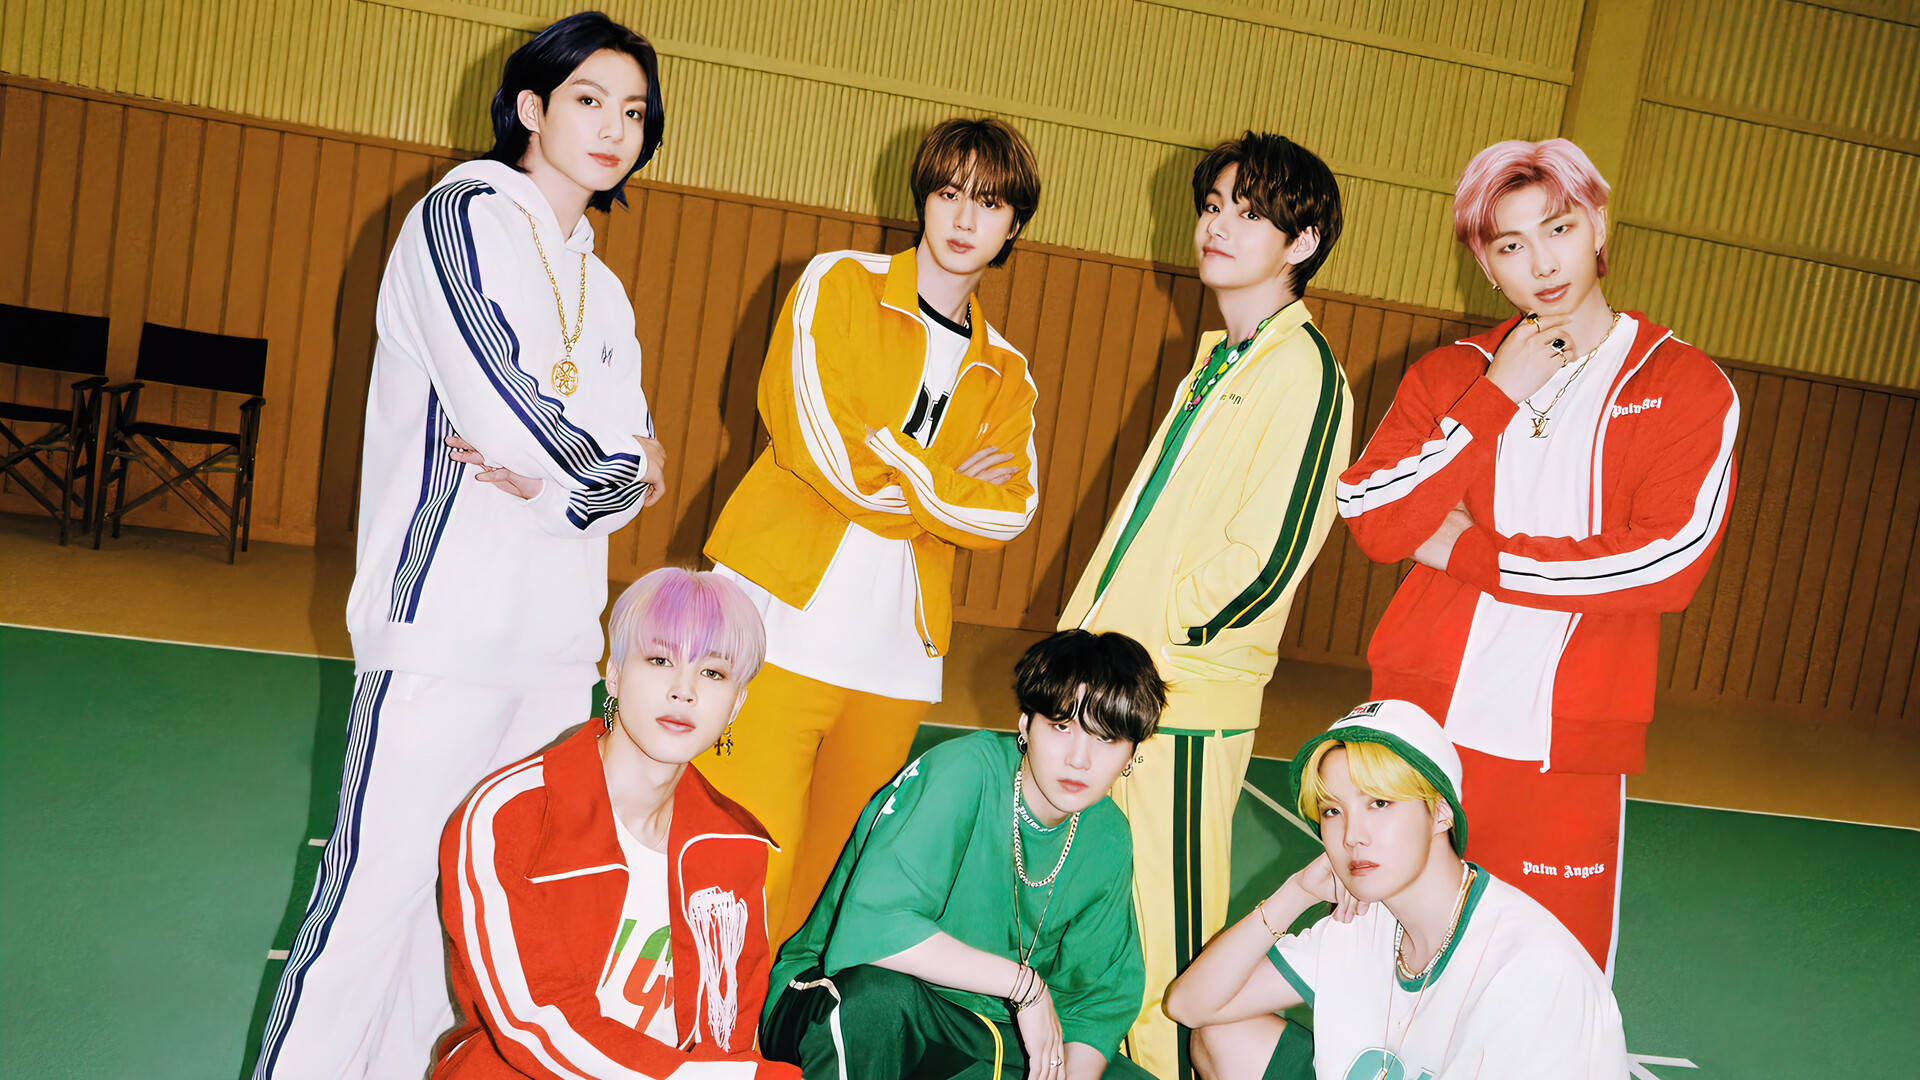 BTS Group Photo At Gym Wallpaper